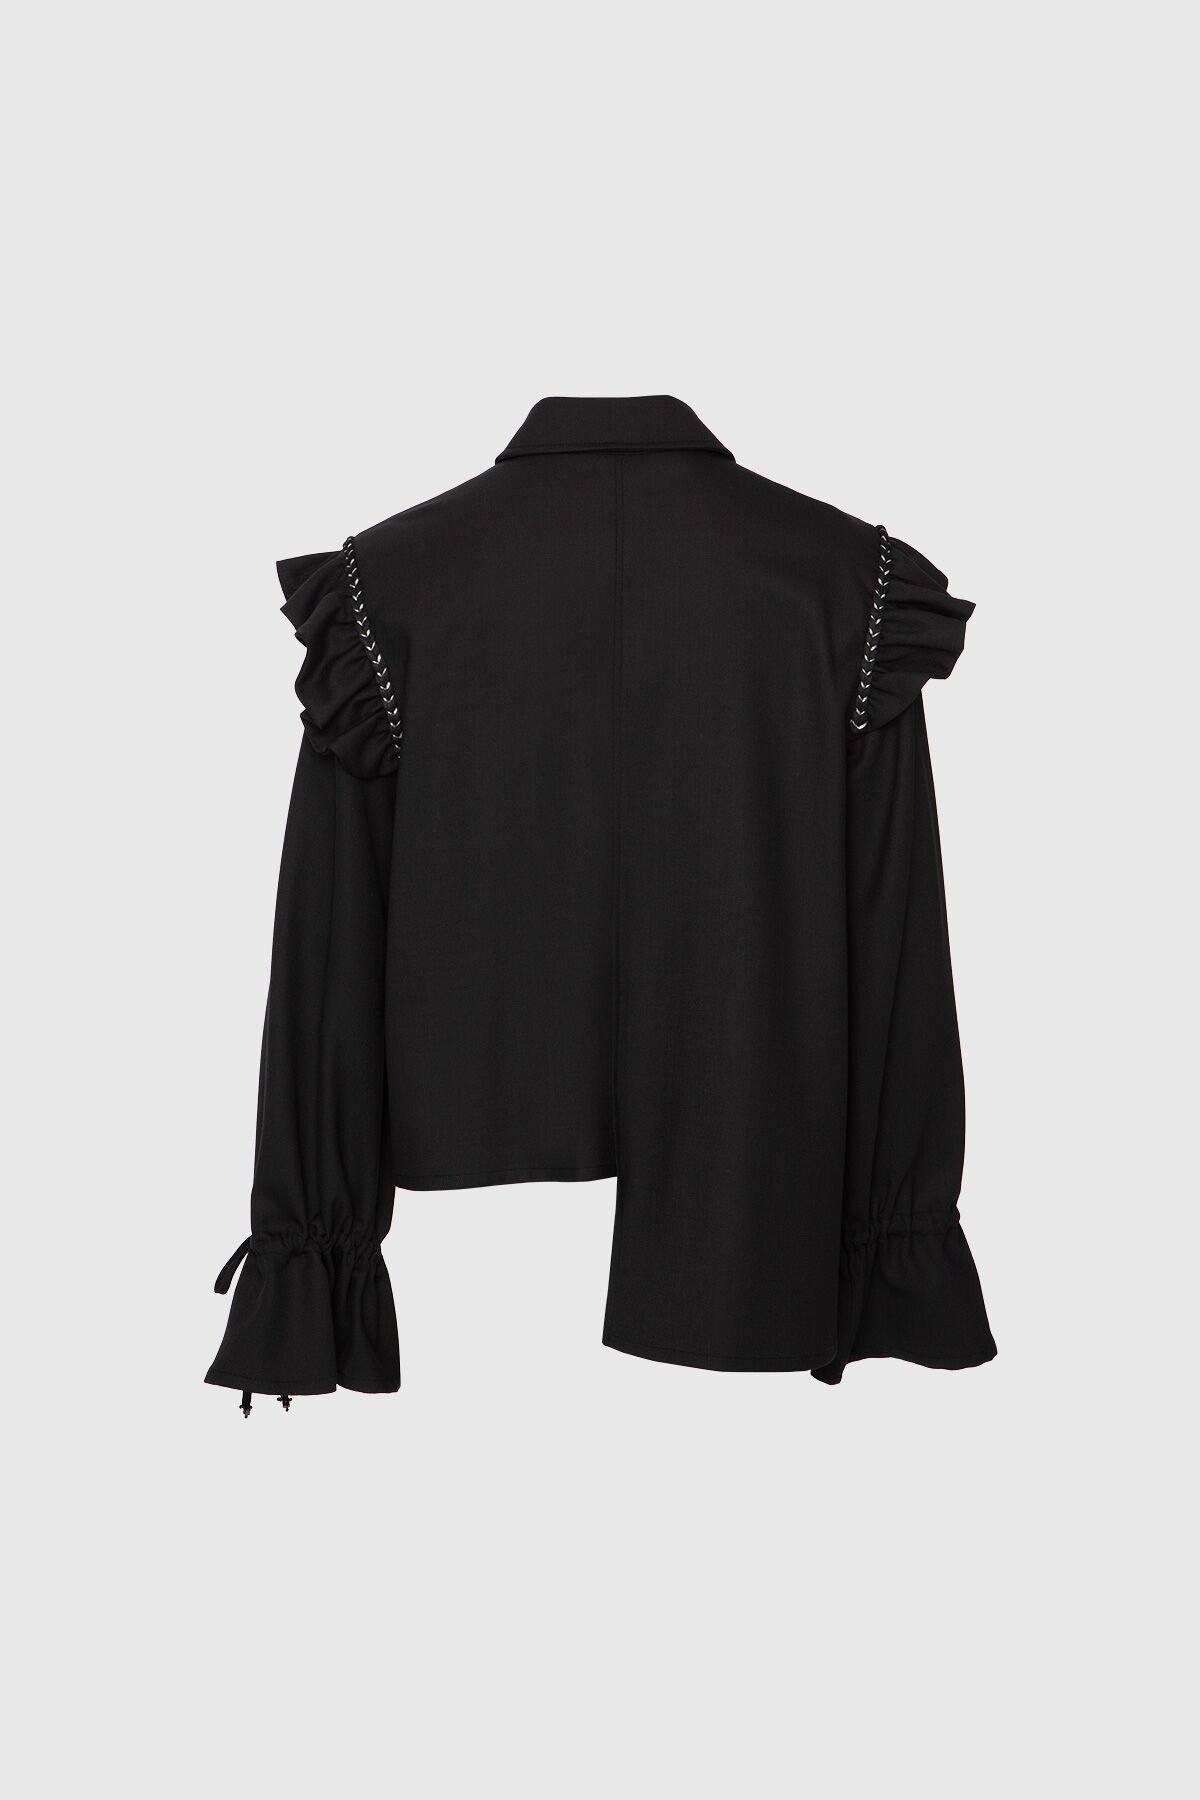 Asymmetrical Cut Black Shirt with Flywheel Detail on the Sleeves